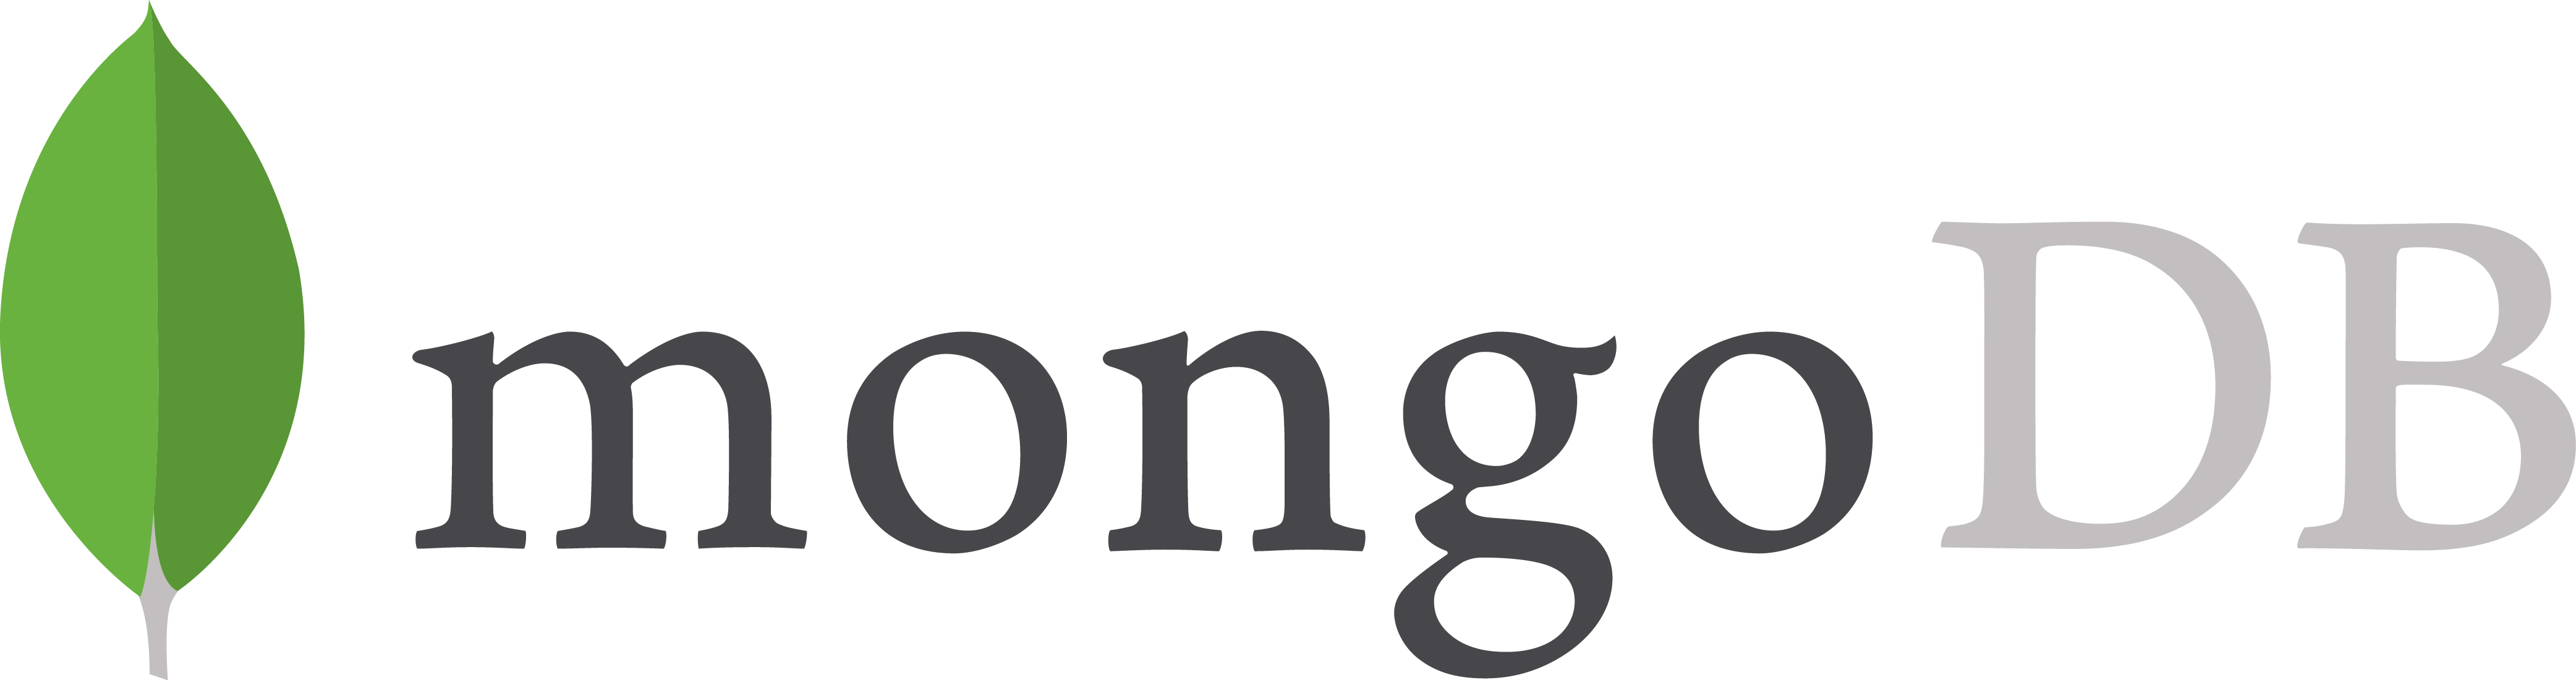 mongodb-logo-rgb-j6w271g1xn.jpg